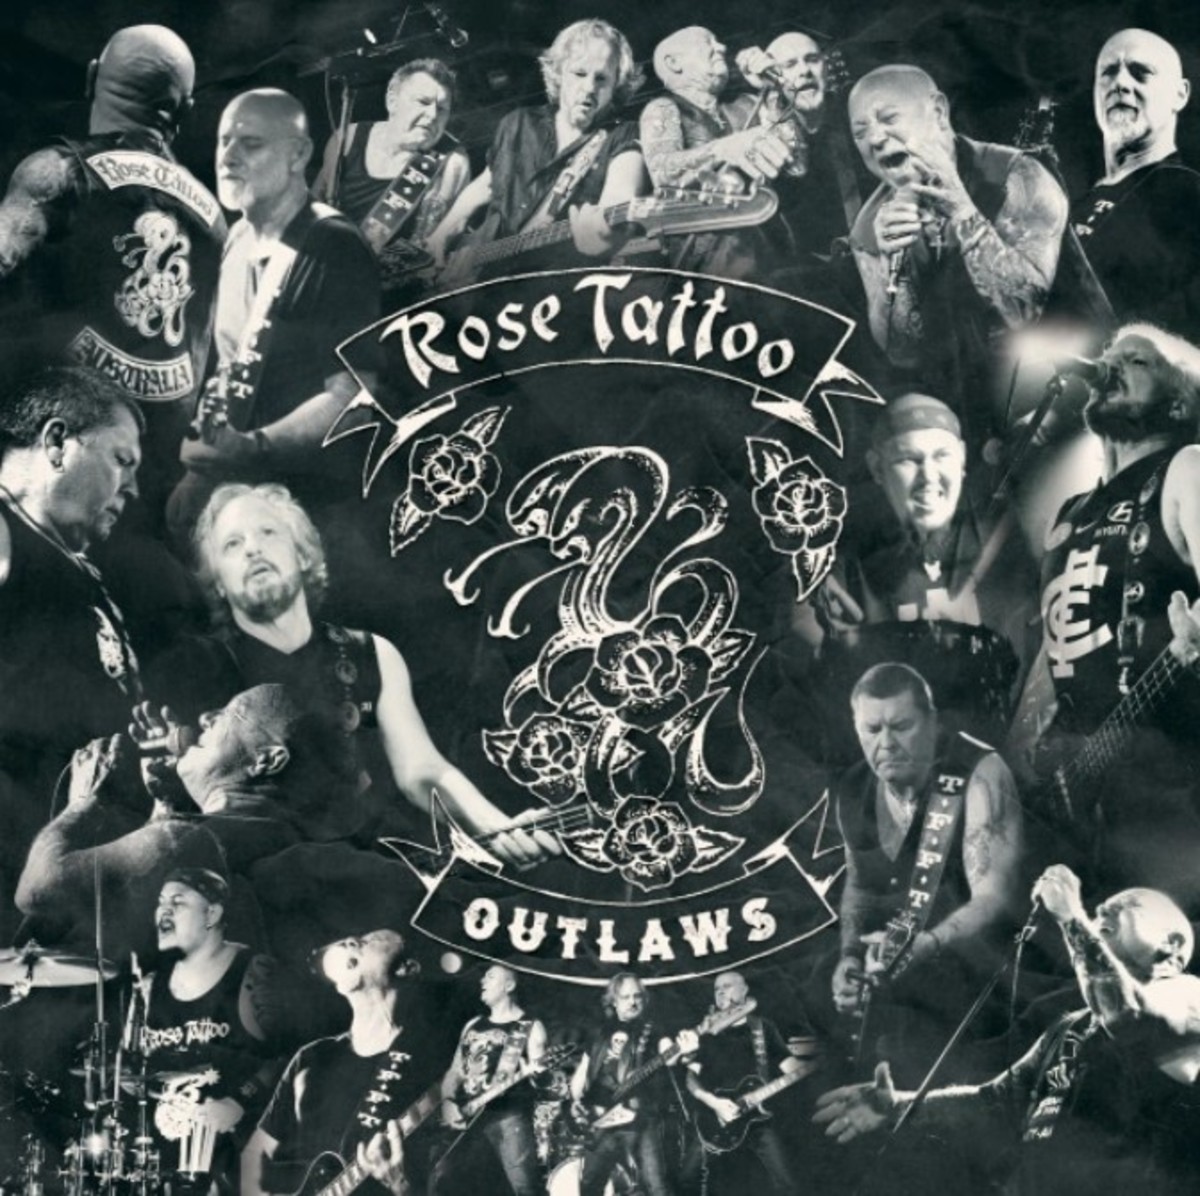 Rose Tattoo Outlaws album cover